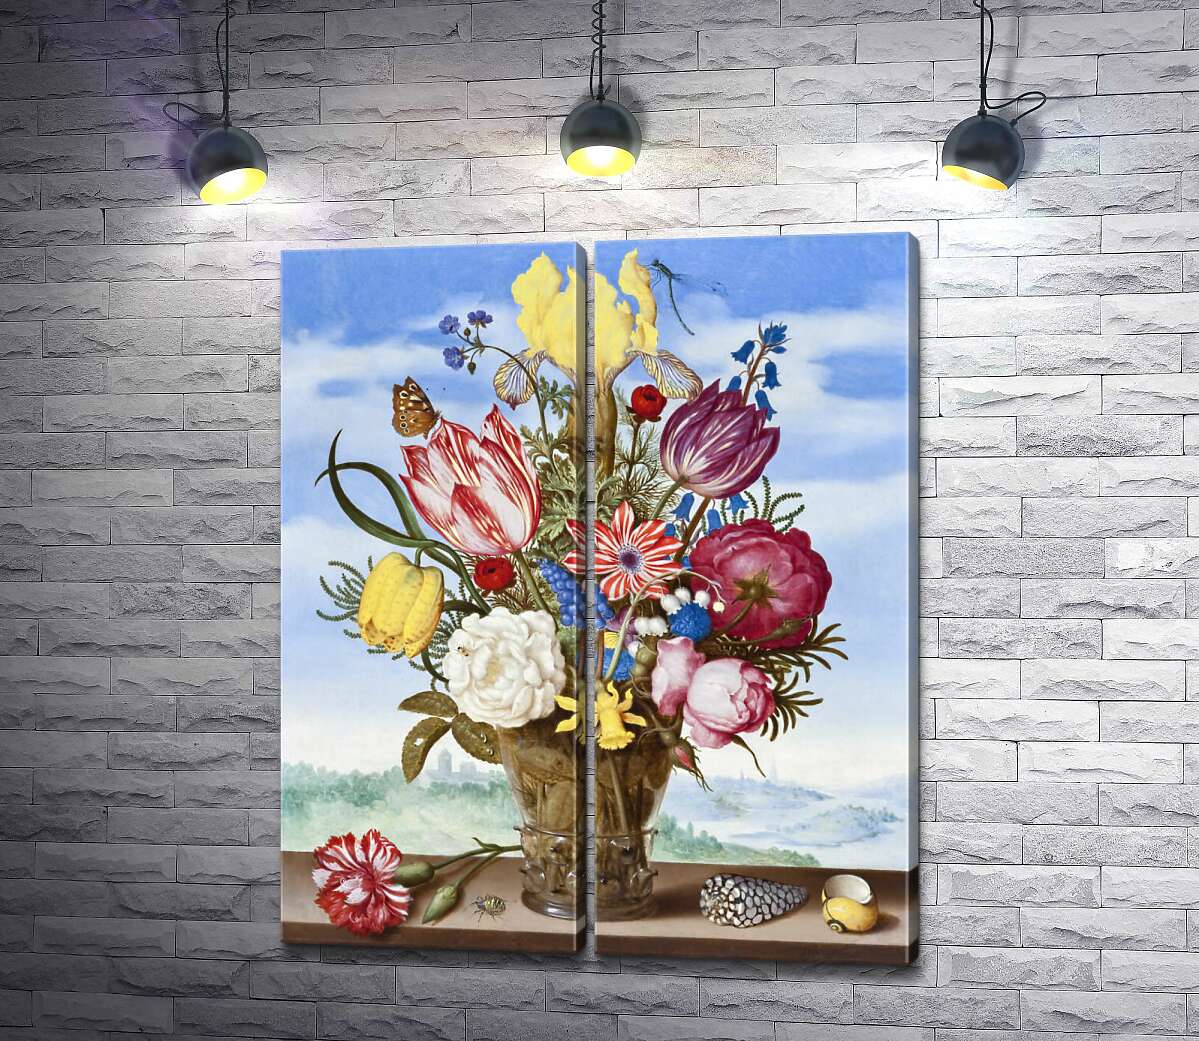 модульна картина Букет квітів на виступі (Bouquet of Flowers on a Ledge) - Амброзіус Босгарт Старший (Ambrosius Bosschaert the Elder)